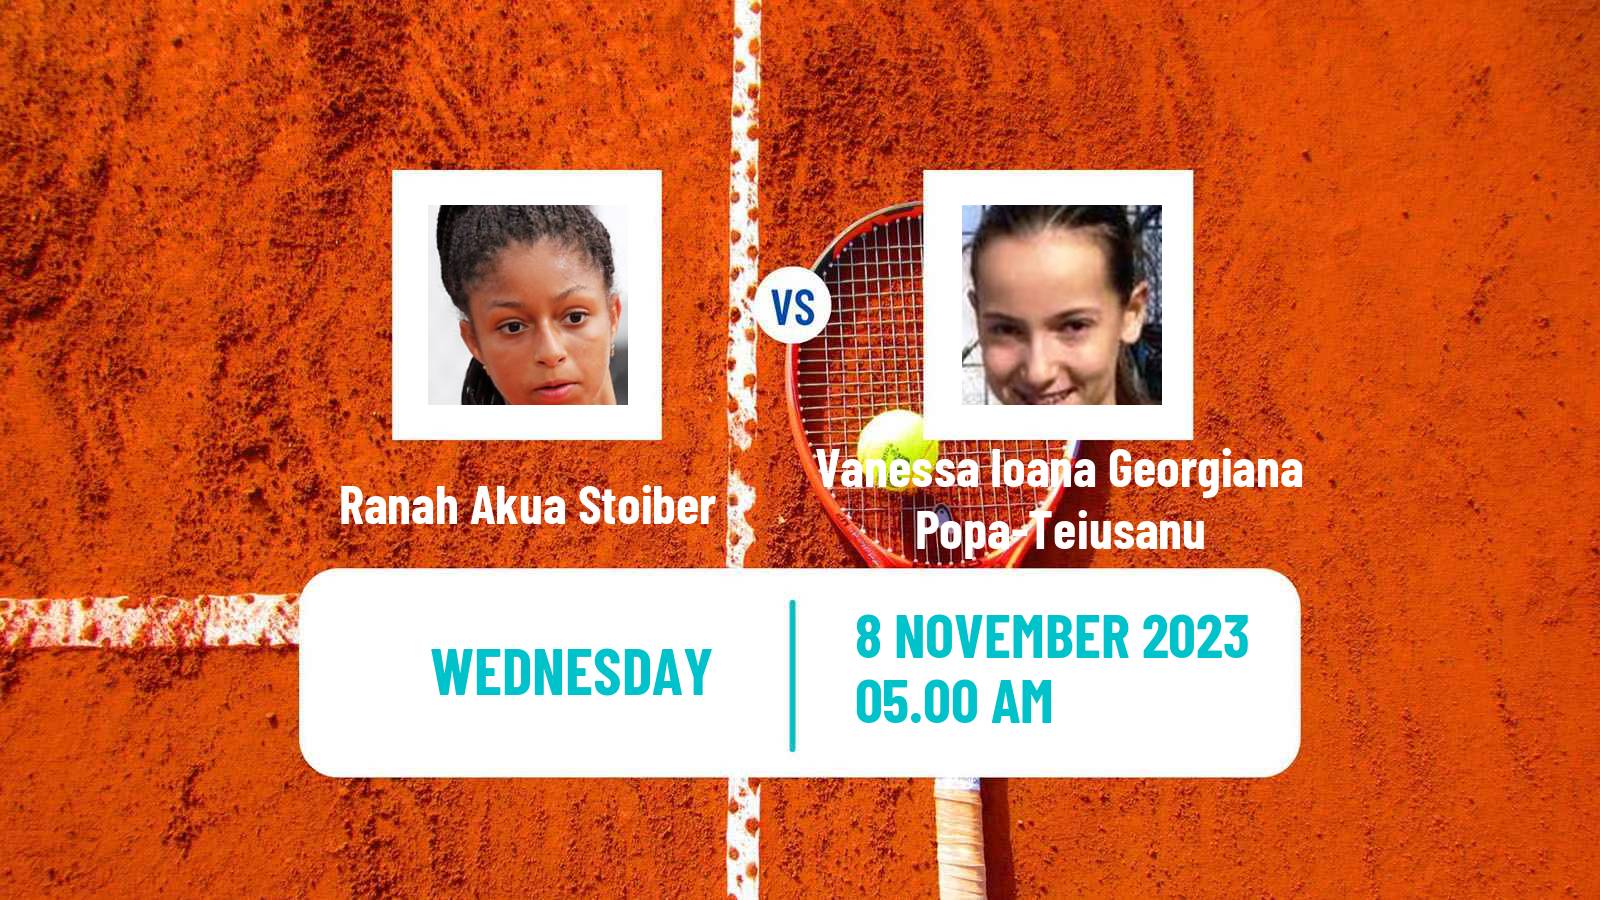 Tennis ITF W15 Monastir 39 Women Ranah Akua Stoiber - Vanessa Ioana Georgiana Popa-Teiusanu